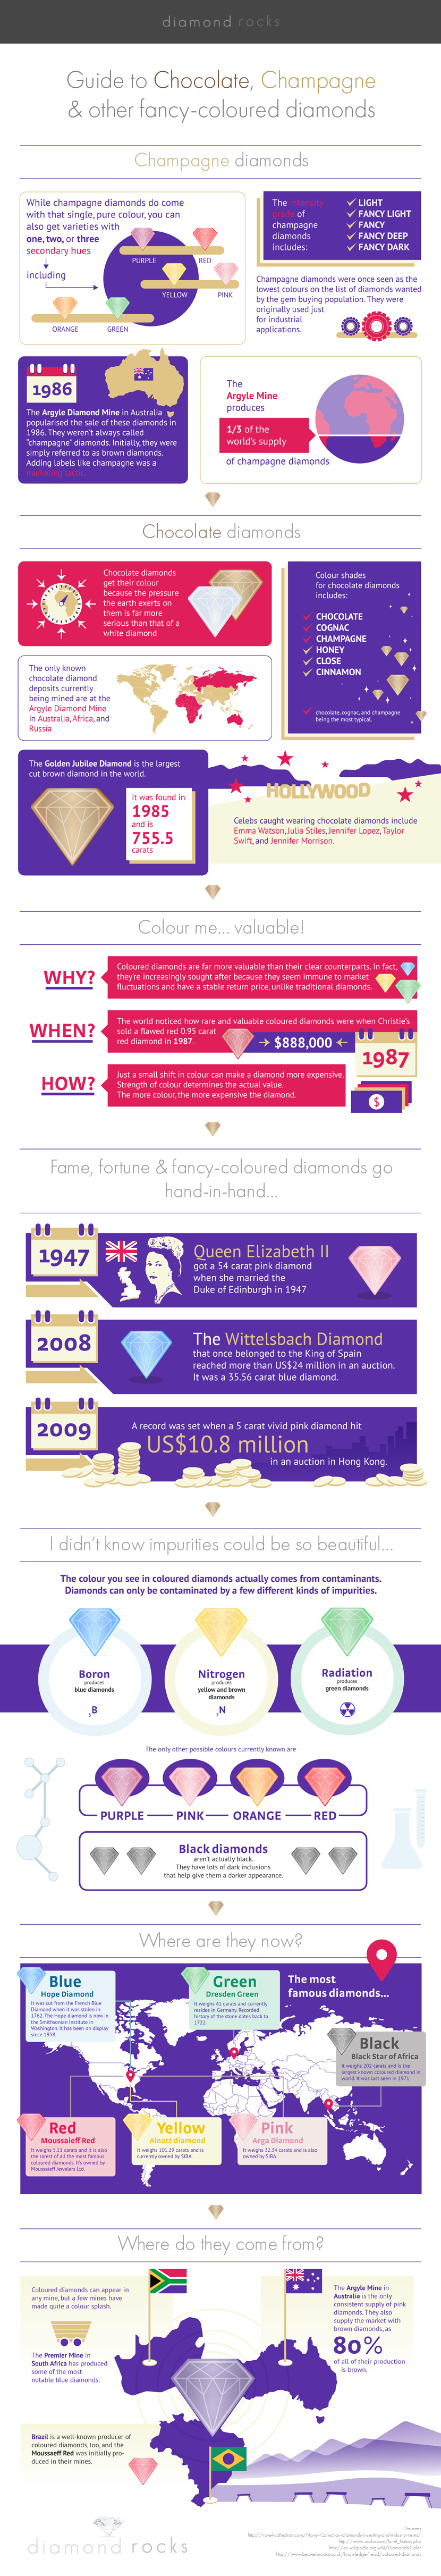 Diamond Rock Champagne and chocolates infographic